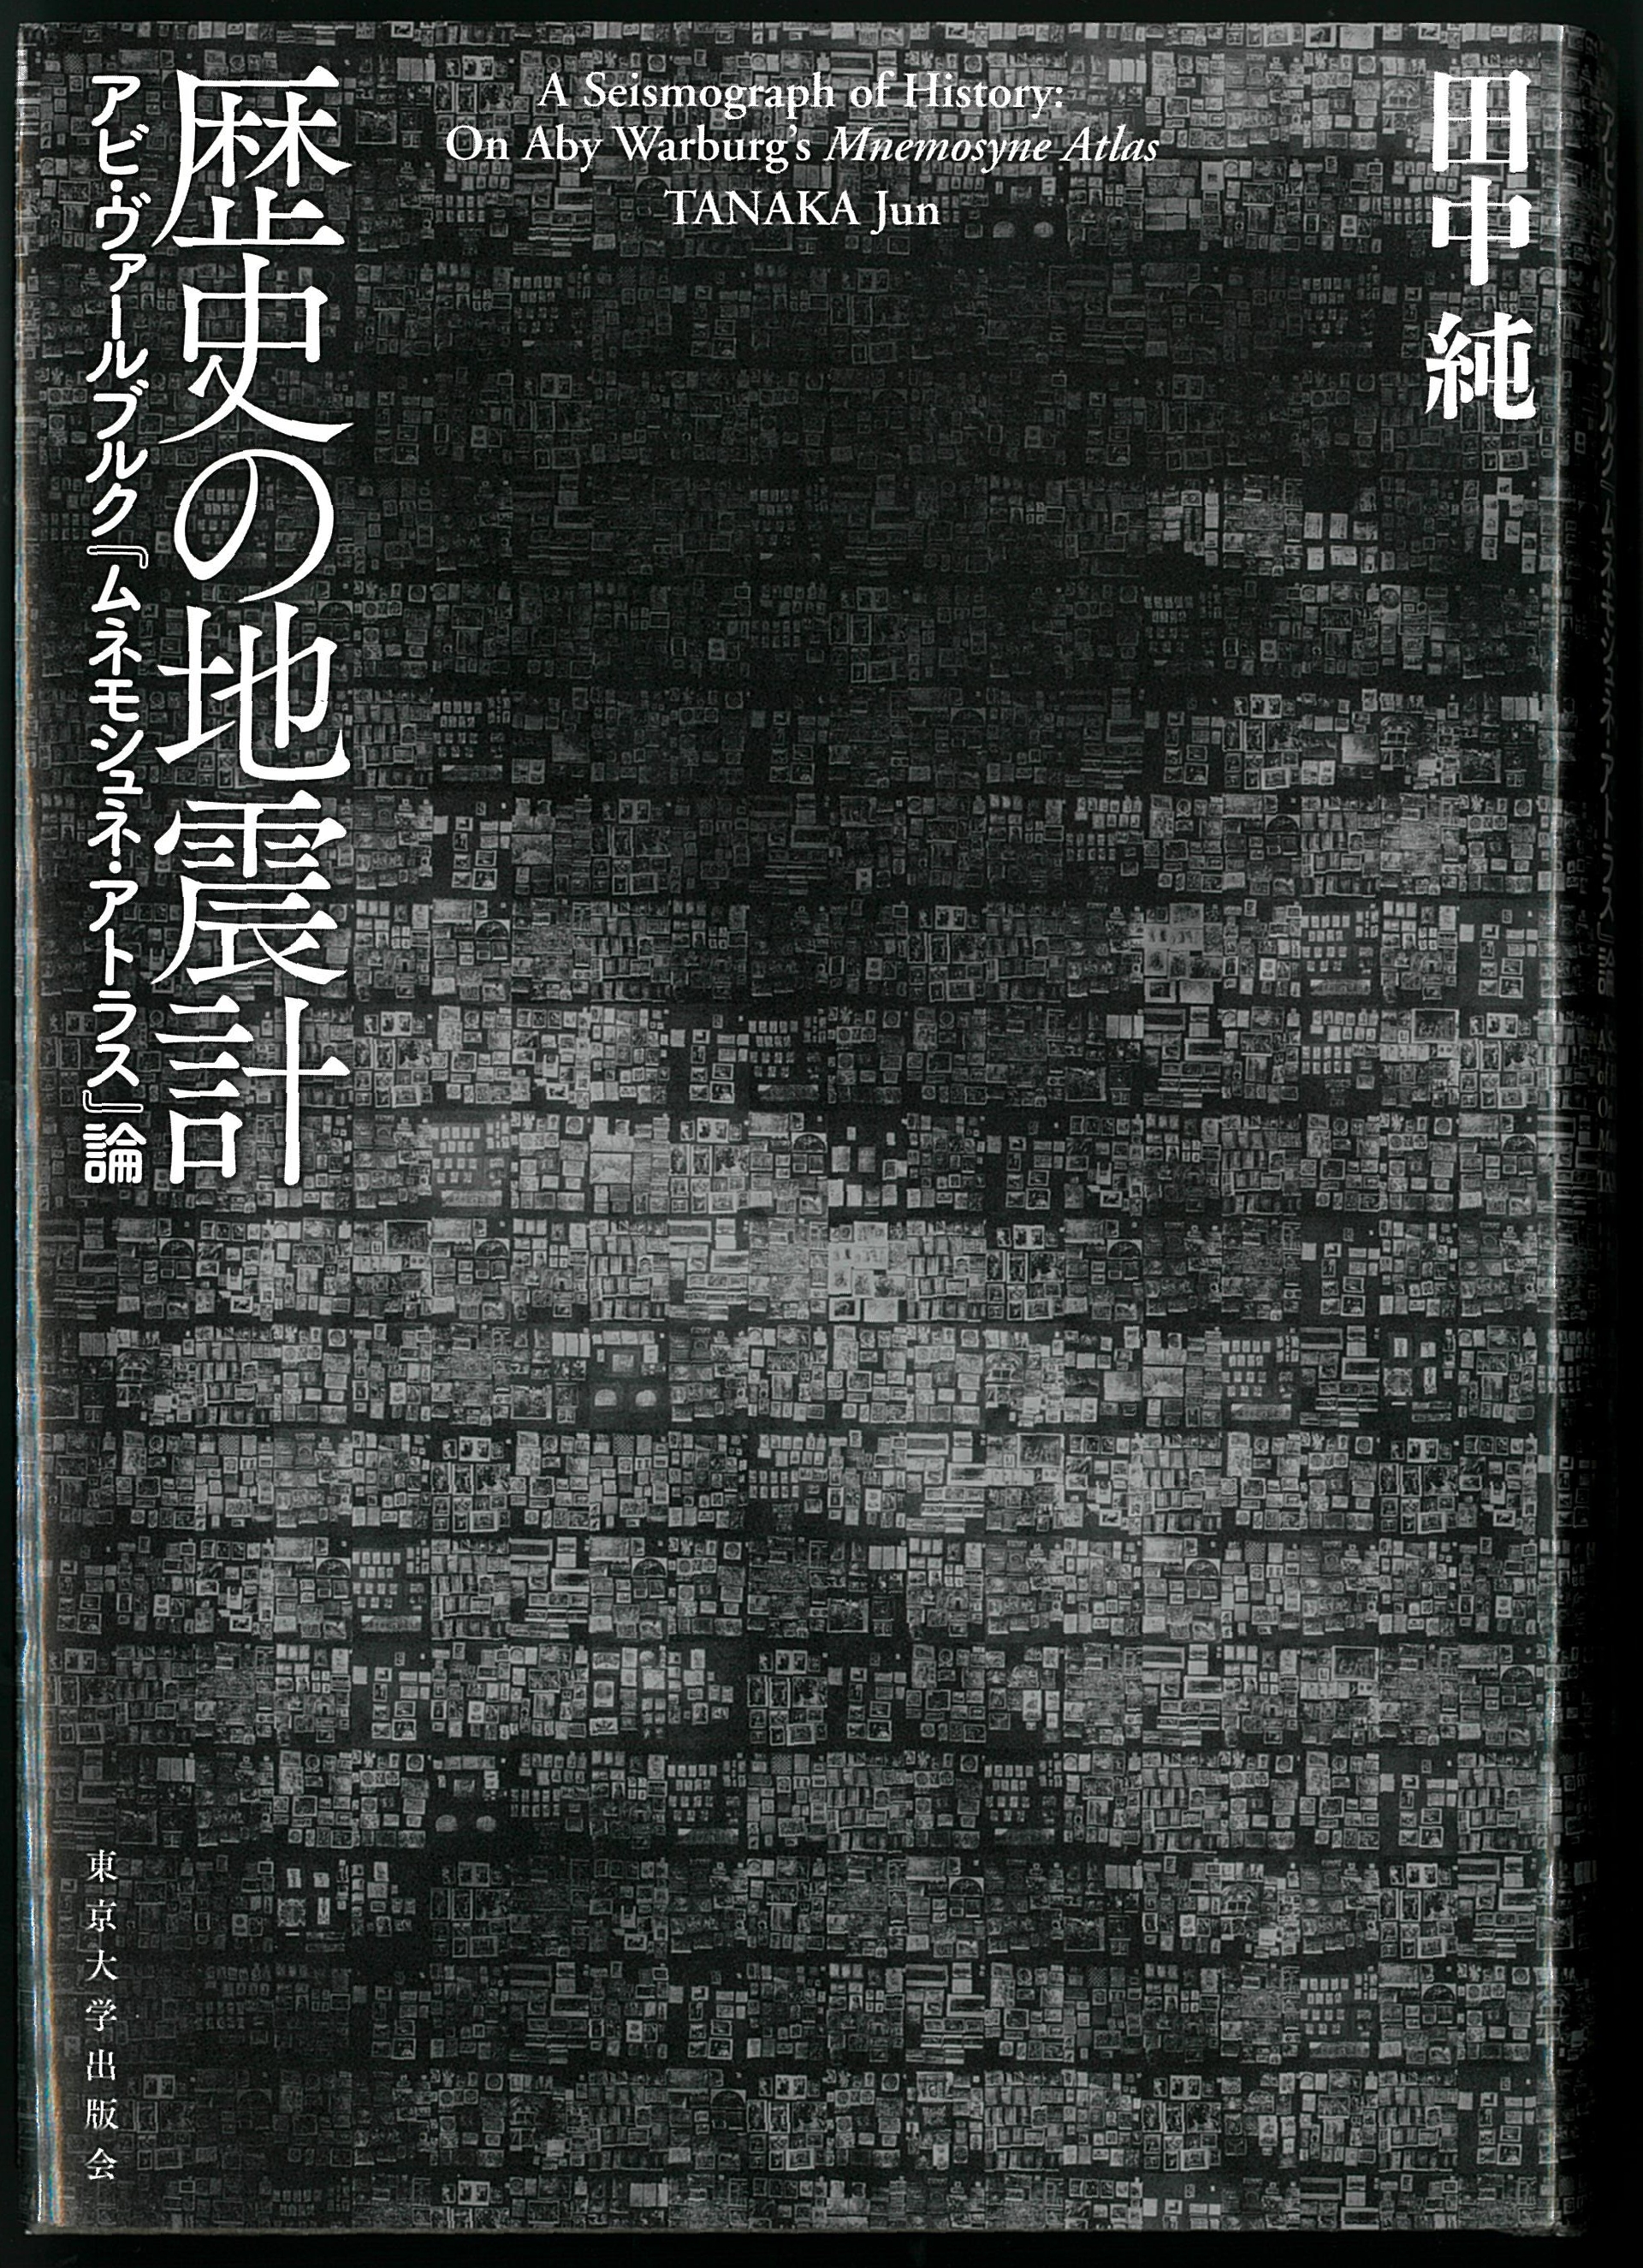 UTokyo BiblioPlaza - 歴史の地震計